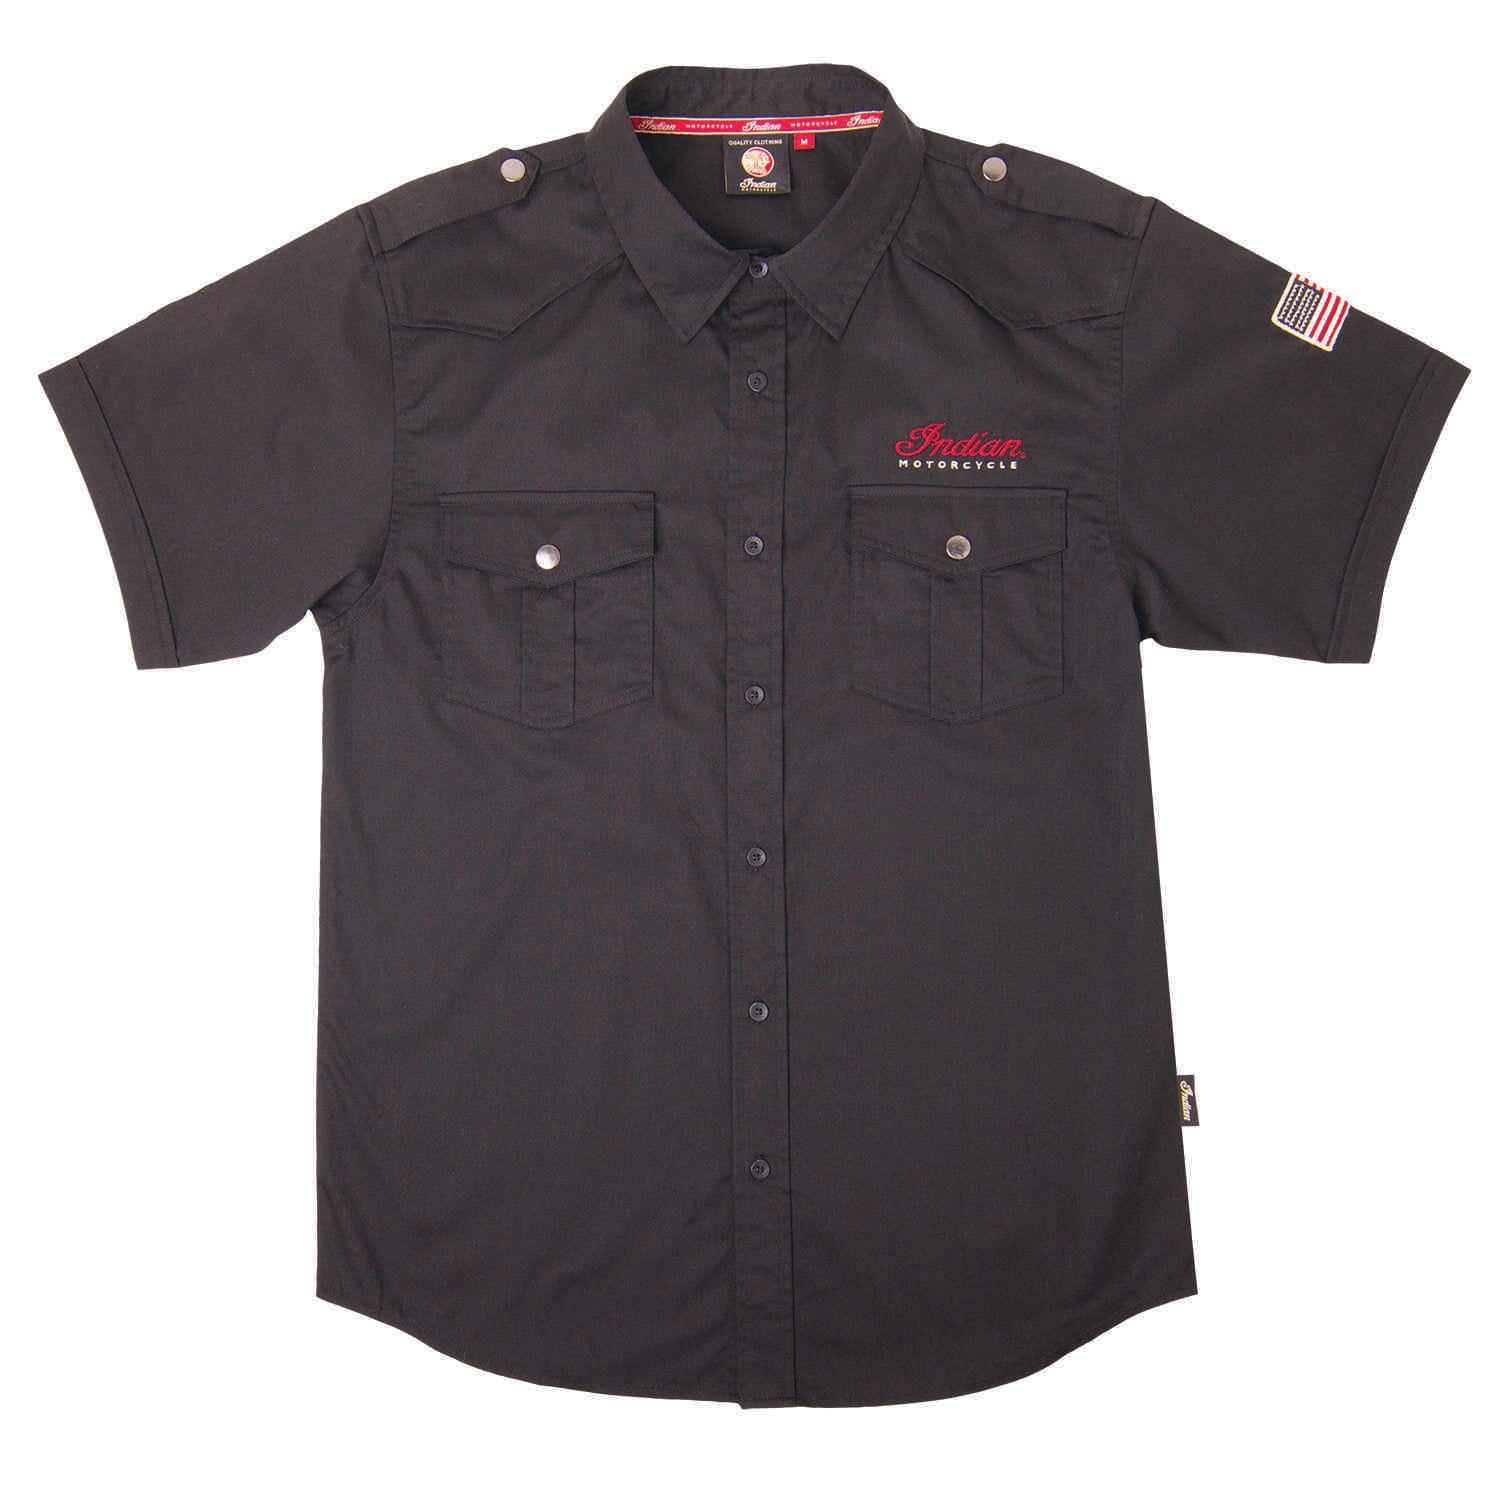 Men's Short-Sleeve Casual Shirt, Black